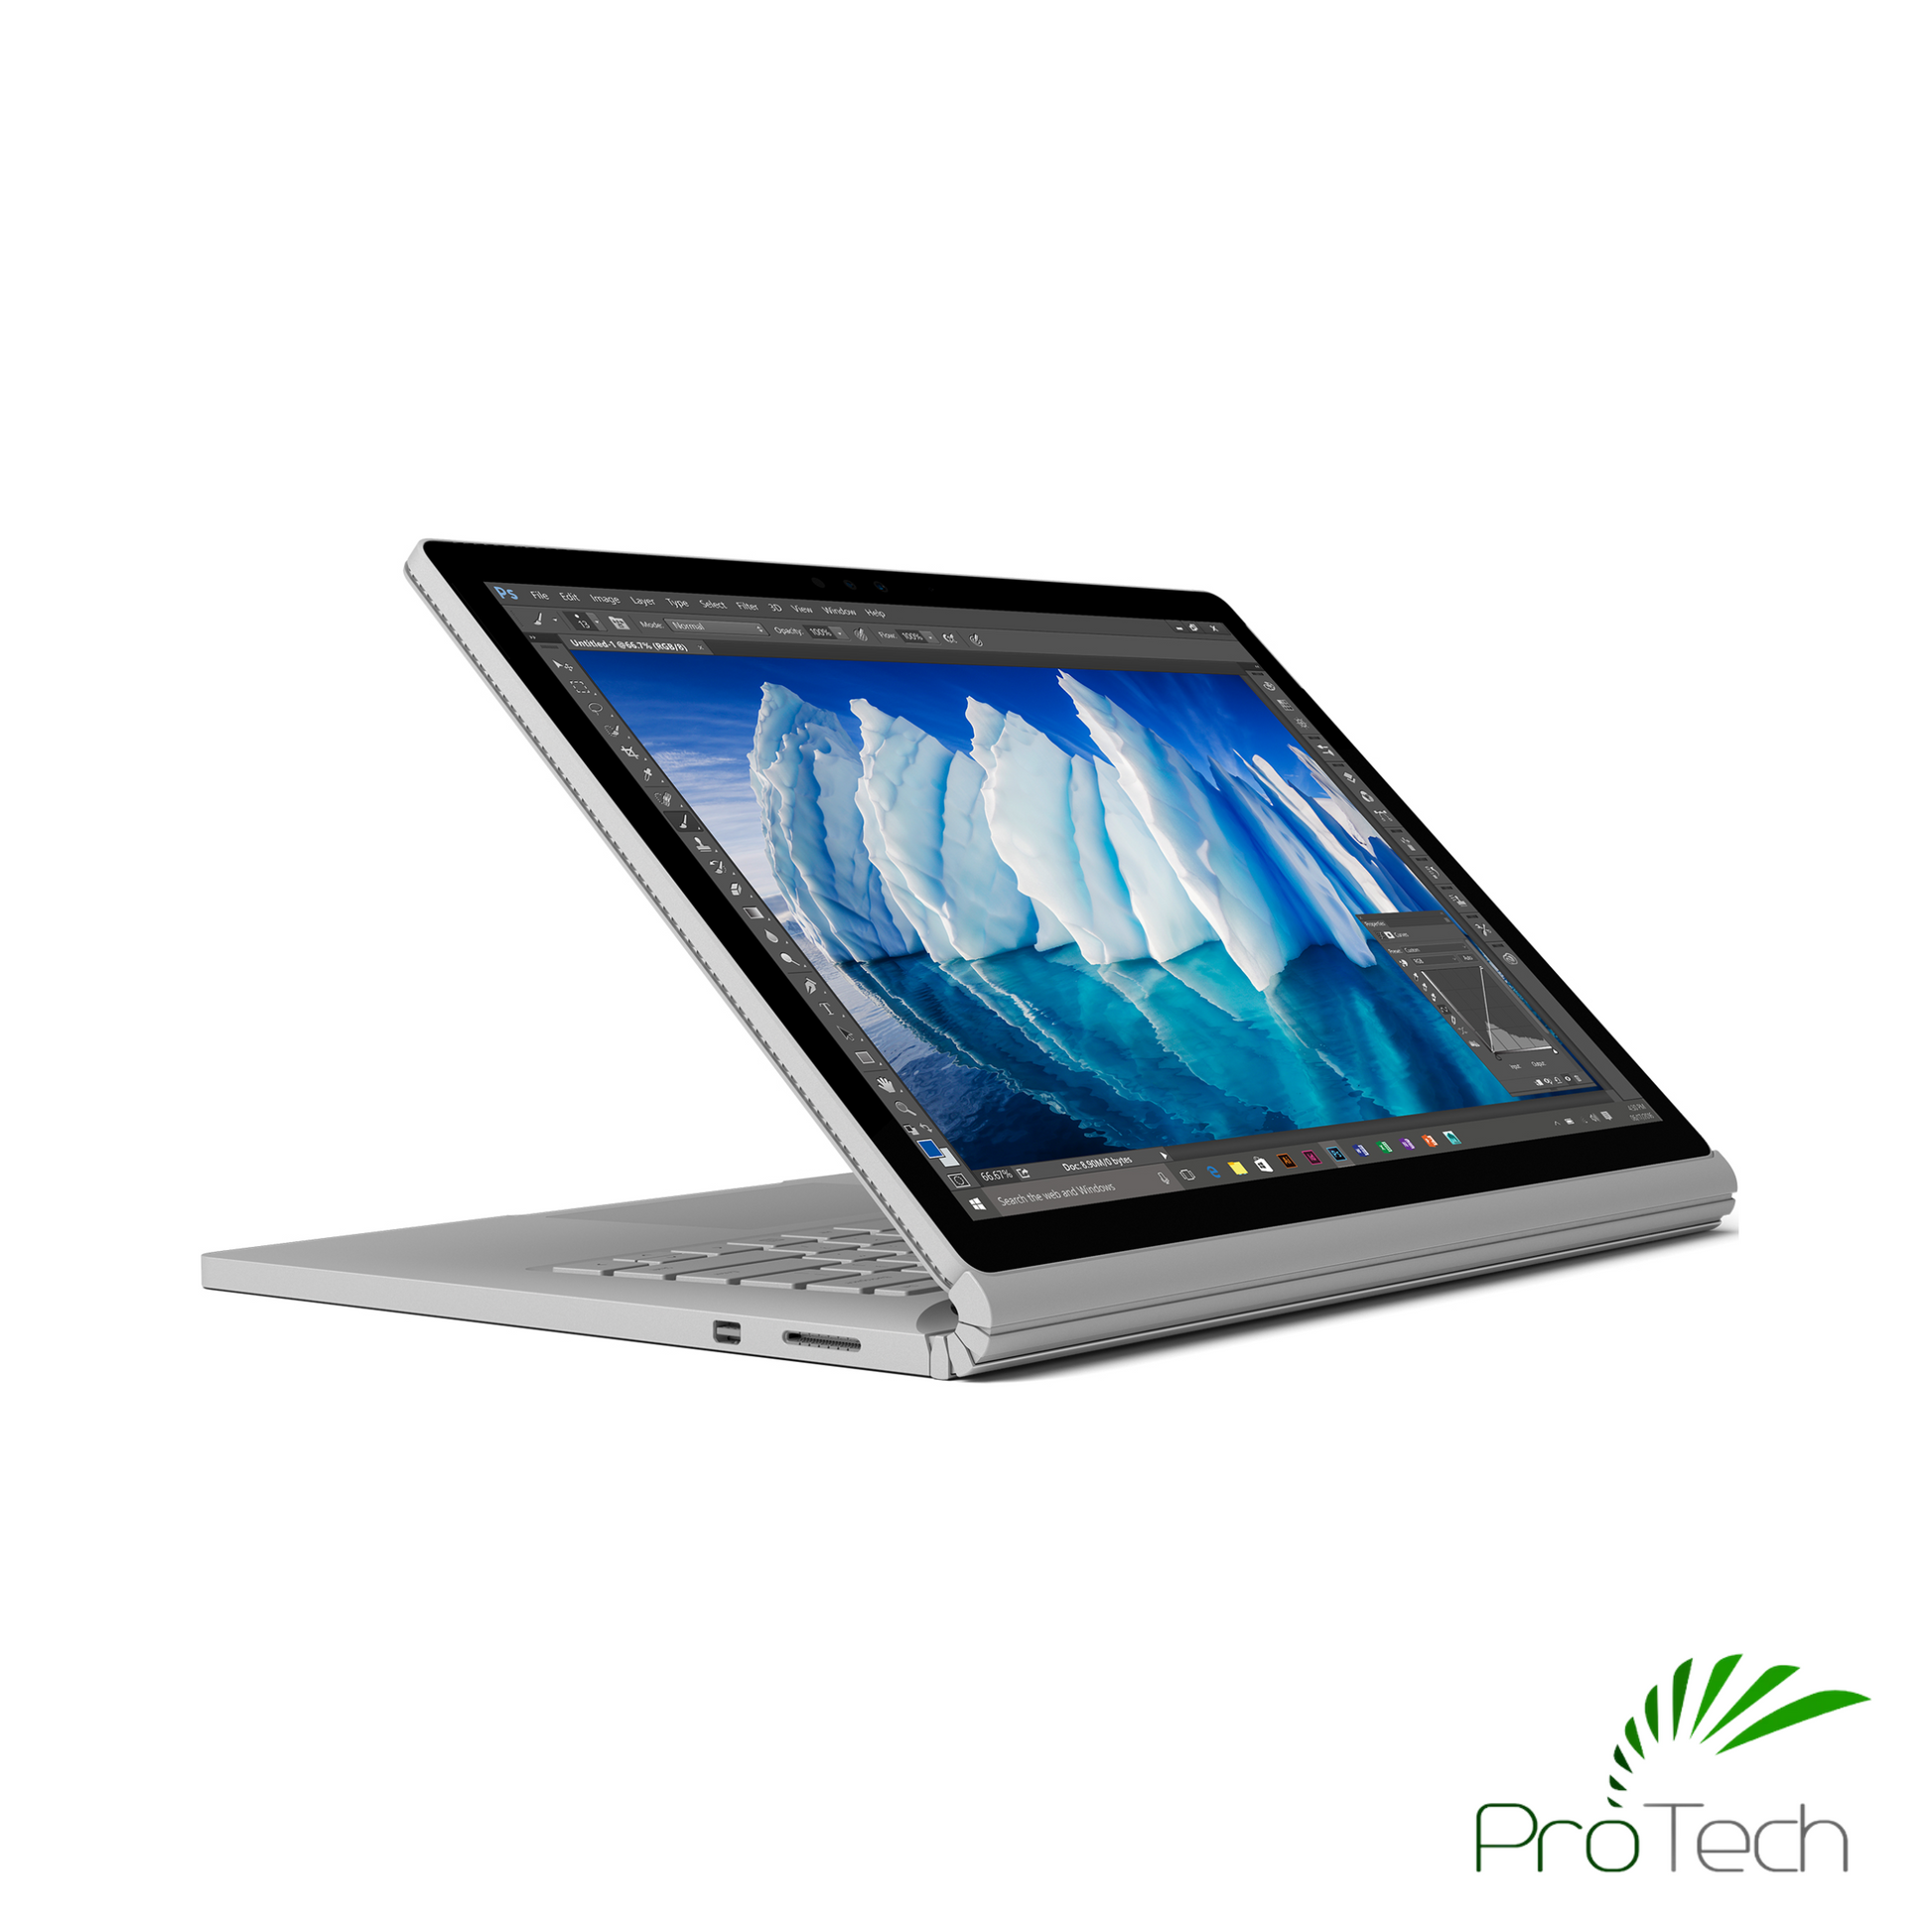 Microsoft Surface Book 1, Core i7, 8GB RAM, 128GB SSD, 2-in-1 laptop, productivity, versatility, professional laptop, creative laptop, student laptop.